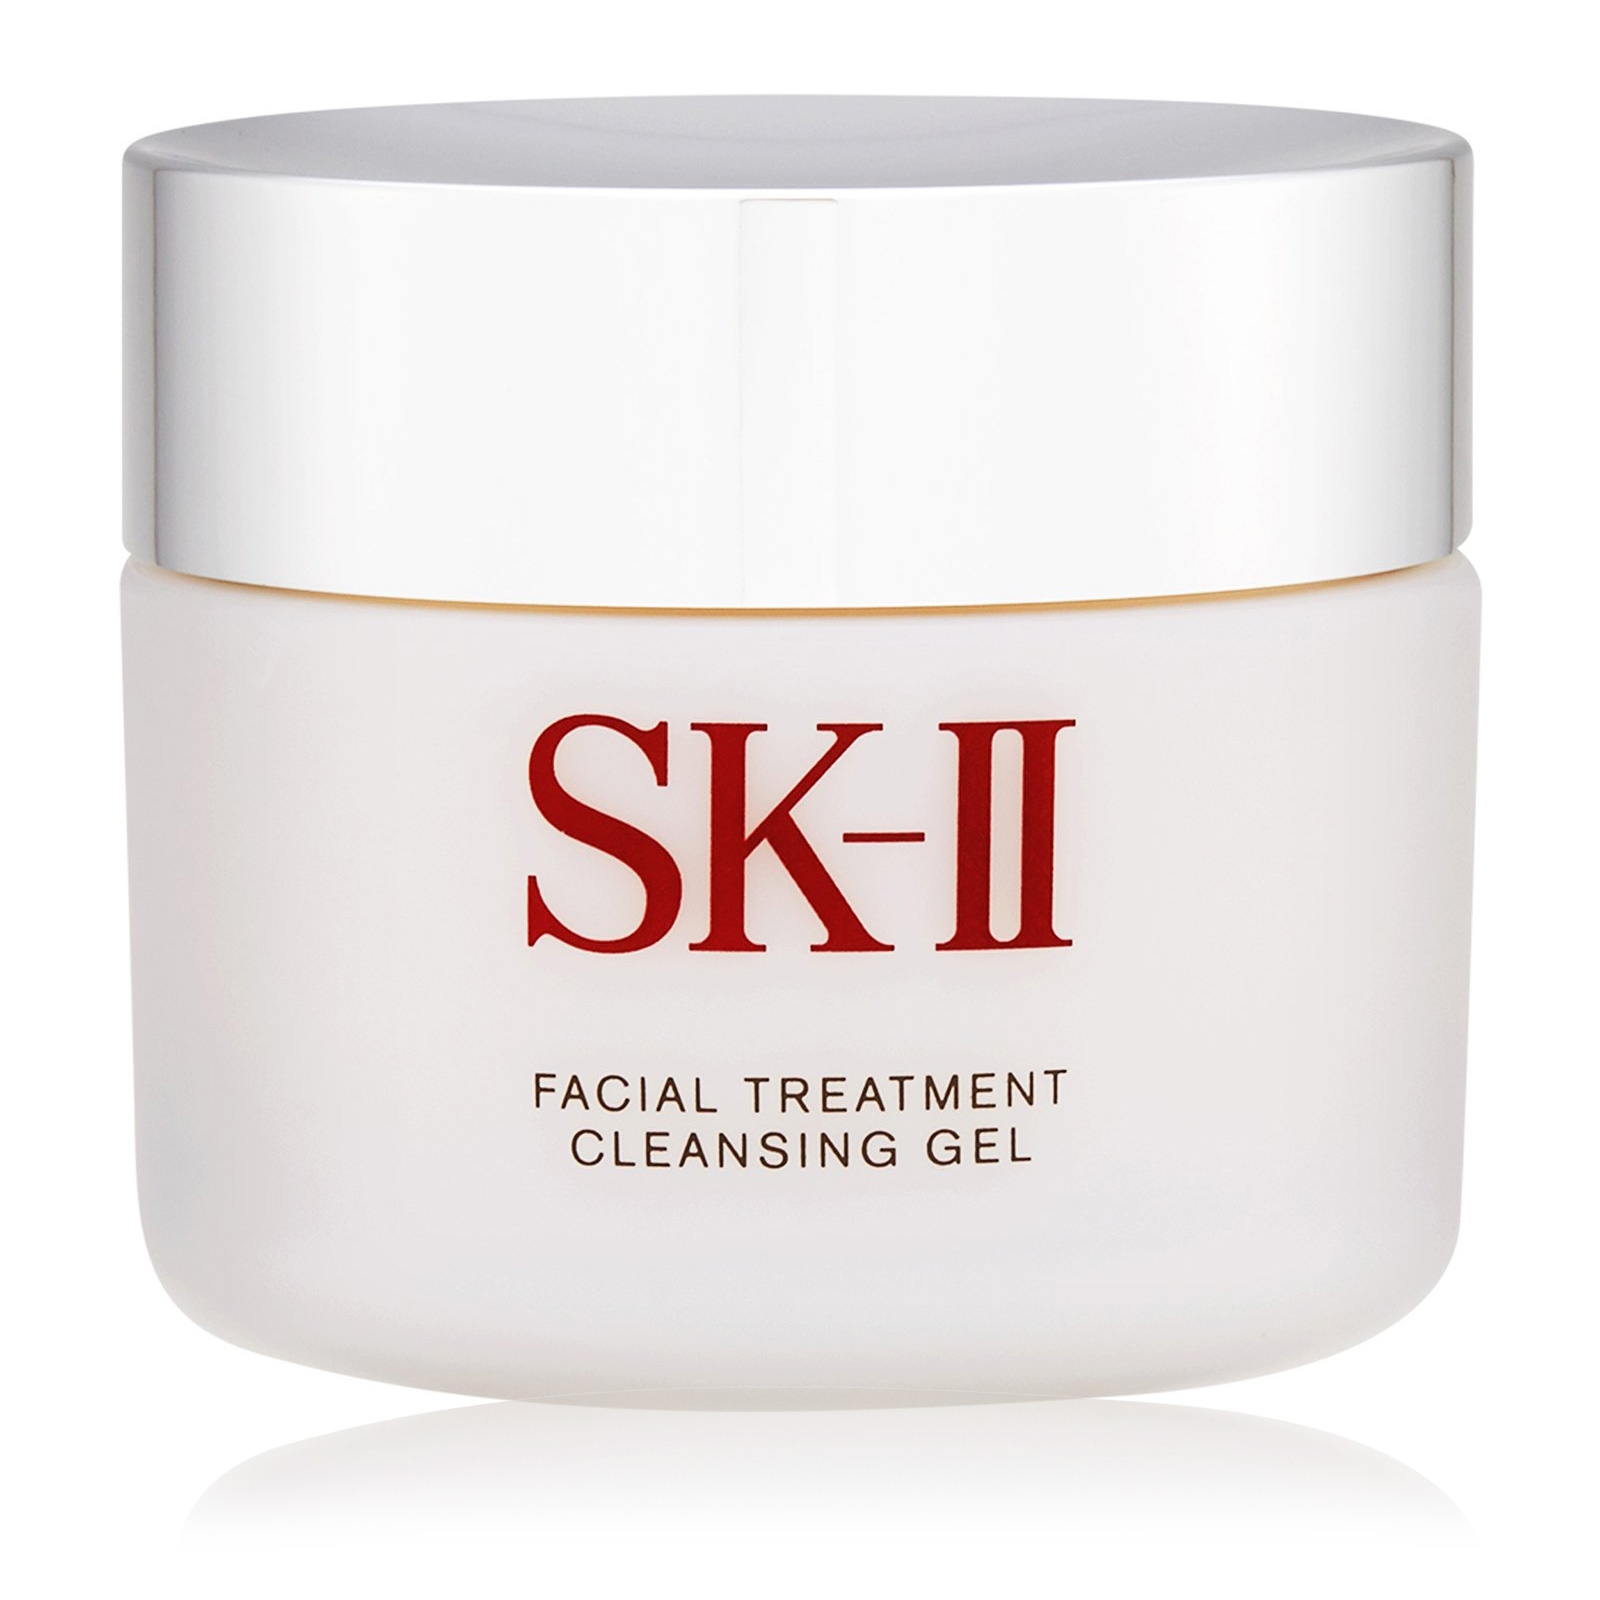 Facial Treatment Cleansing Gel